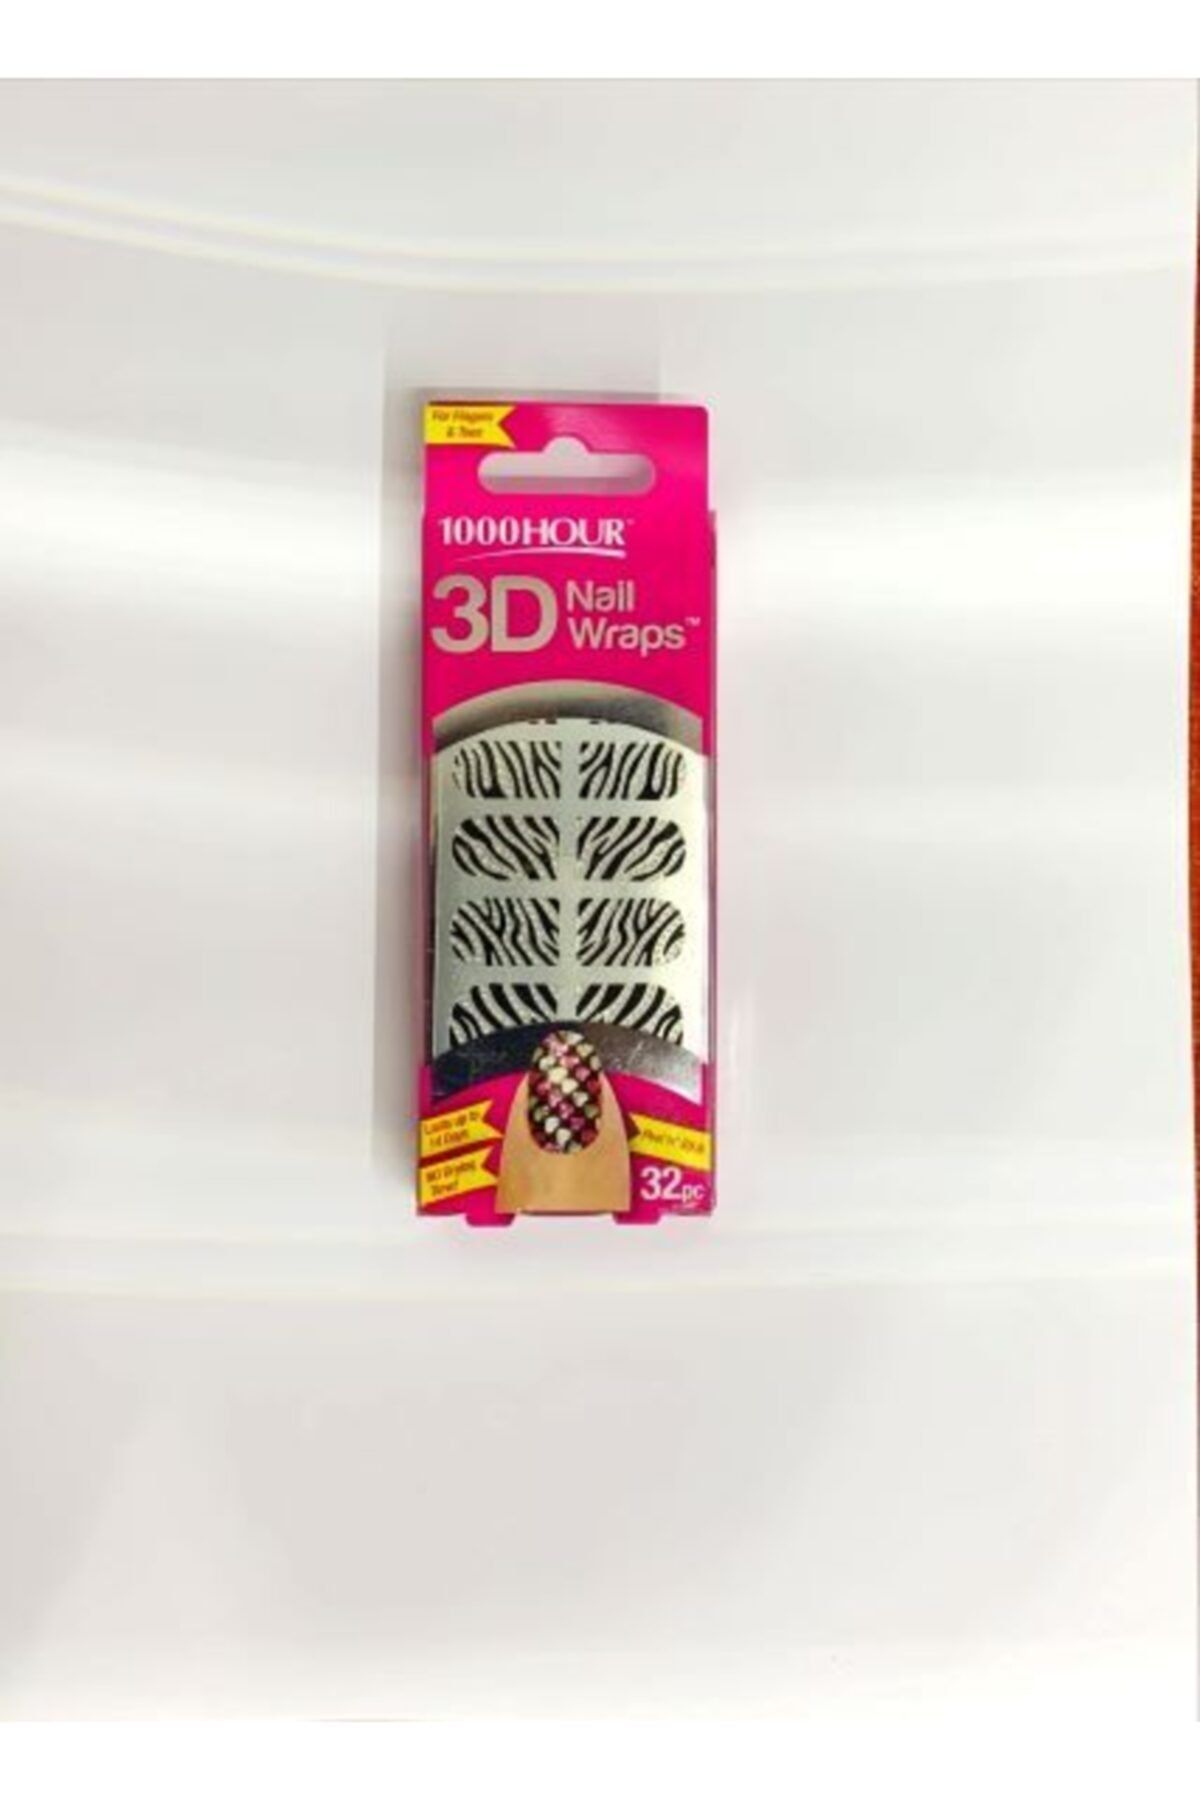 1000Hour 1000 Hour 3d Nail Wraps Tırnak Süsü 32 Adet Nail Art Sticker